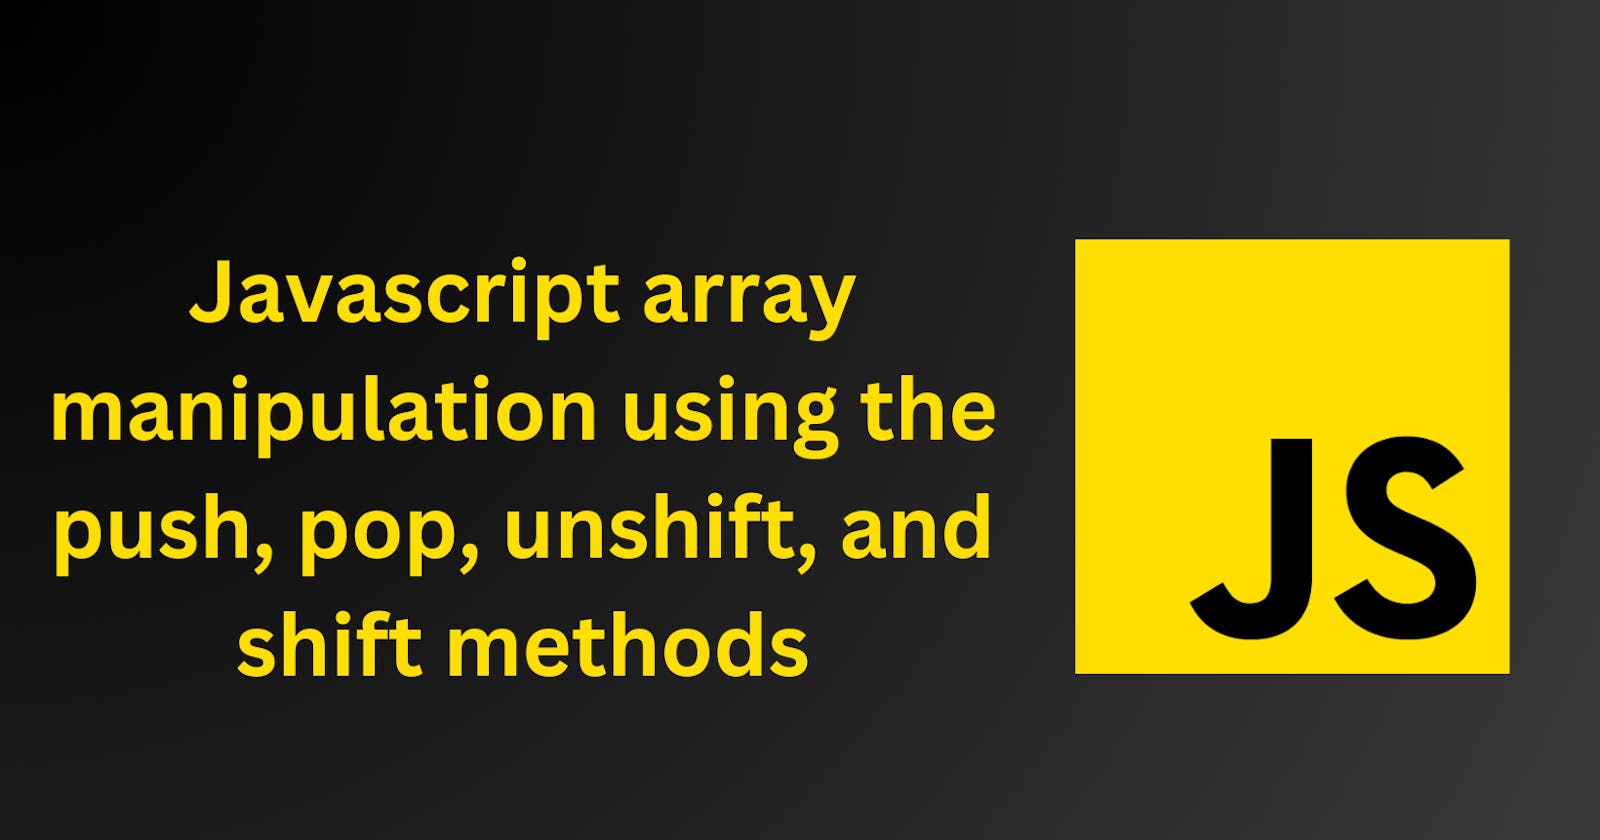 Javascript array manipulation using the push, pop, unshift, and shift methods